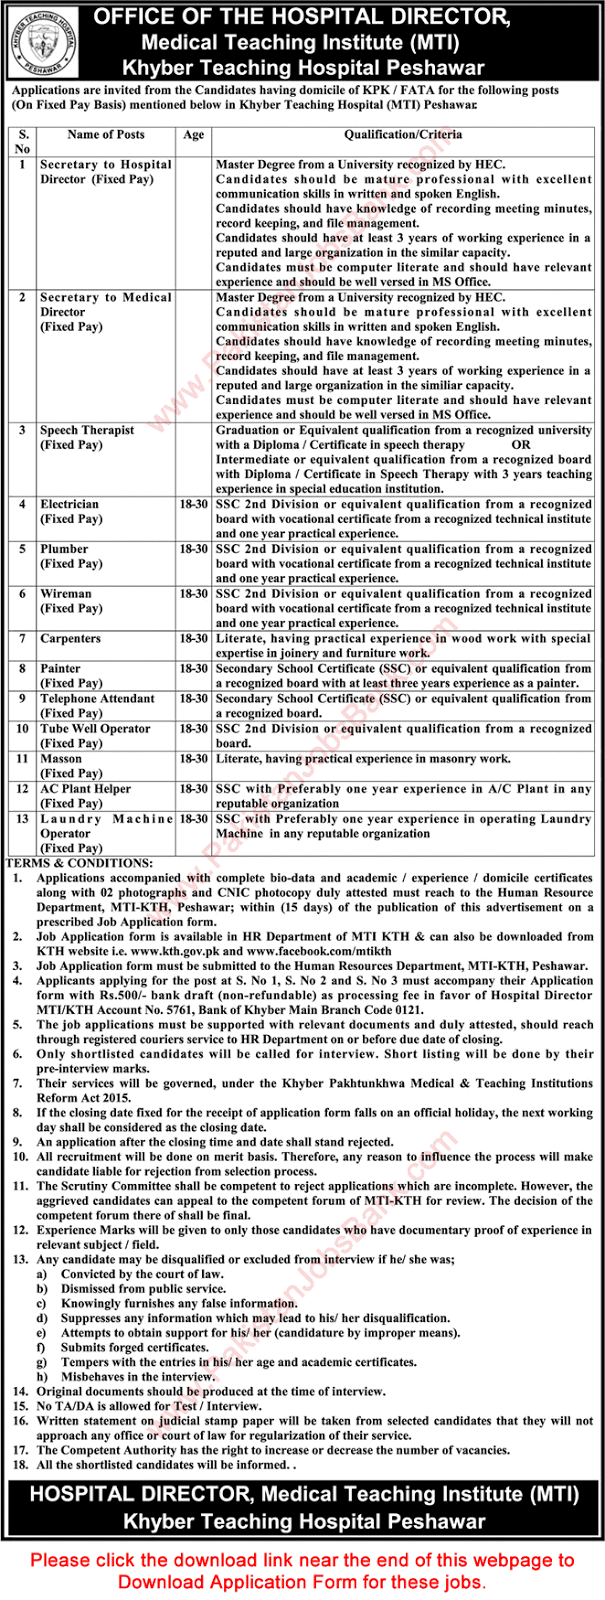 Khyber Teaching Hospital Peshawar Jobs May 2017 KTH MTI Application Form Download Latest